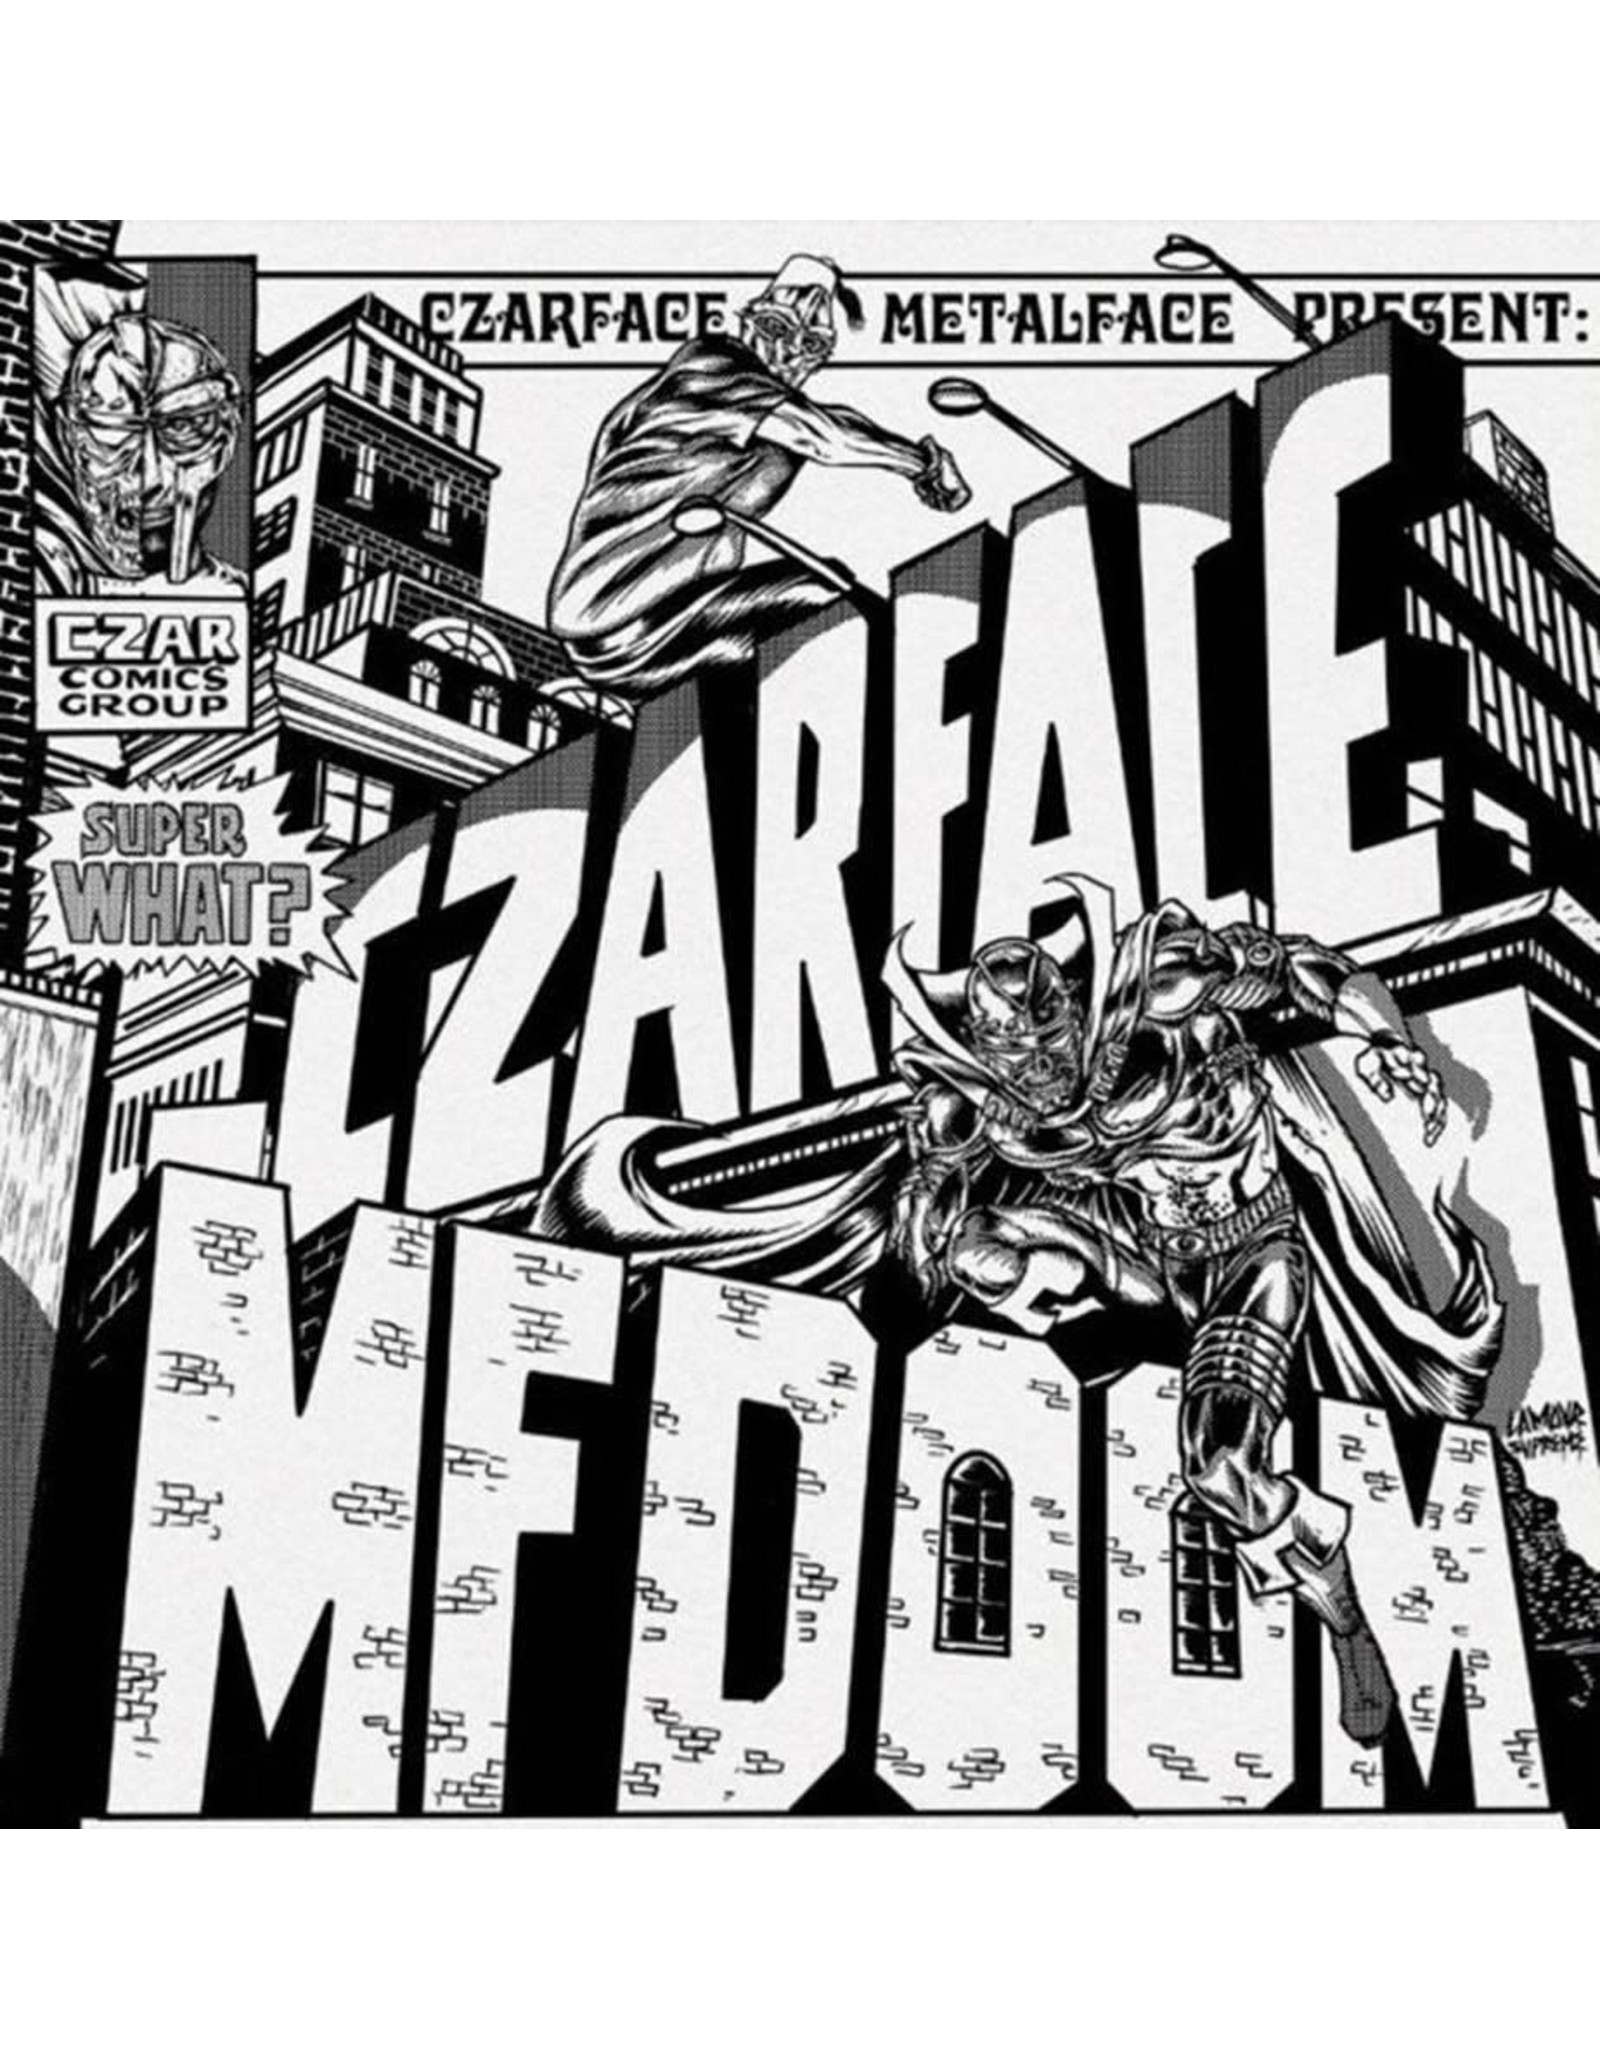 Silver Age Czarface & MF Doom: Super What? (ltd black & white edition) LP